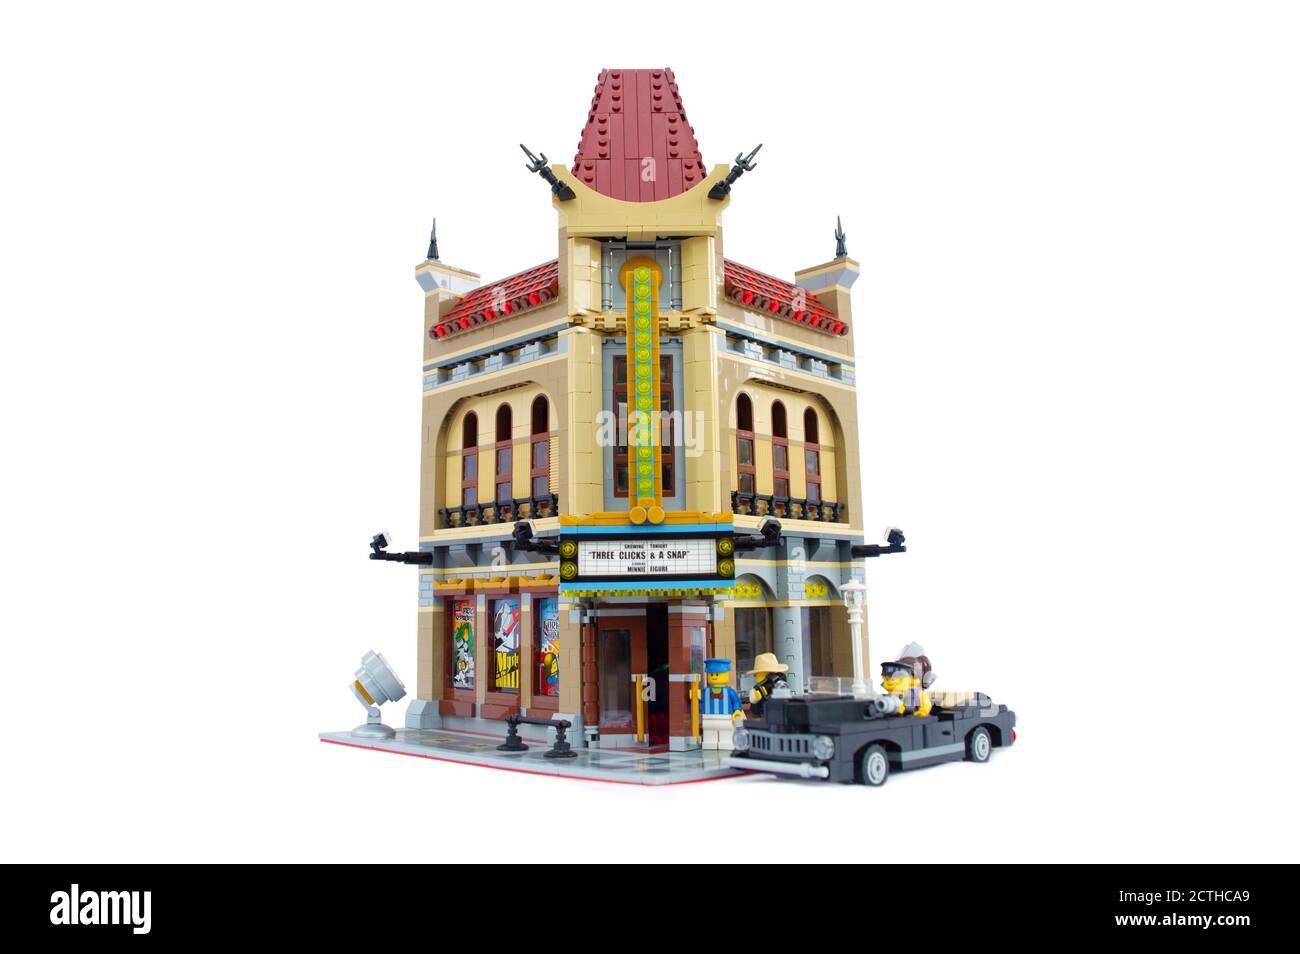 LEGO Creator Expert Palace Cinema 10232 - Front View (Full) -Retired Set  Stock Photo - Alamy